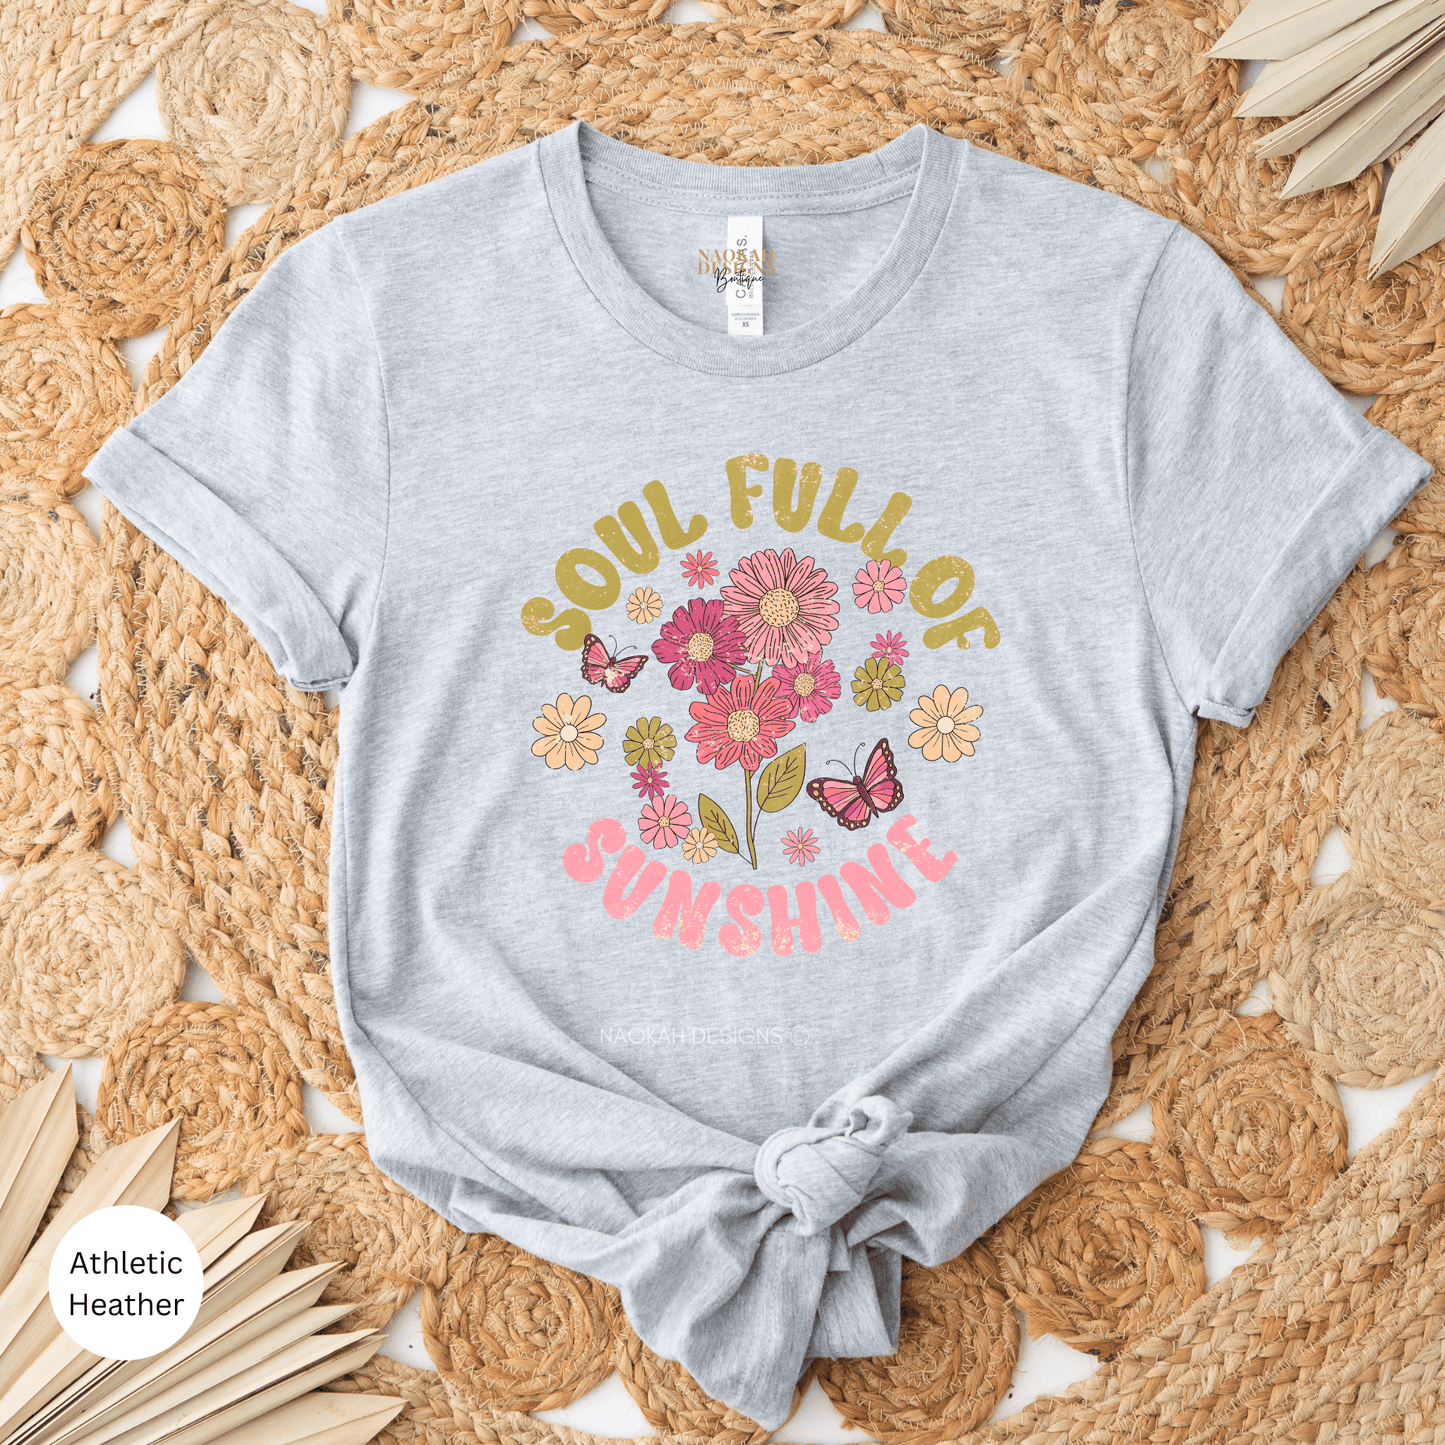 Soul Full Of Sunshine Shirt, Retro Sunshine Tee, Motivational Shirt, Summer Shirt, Self Love Shirt, Bohemian Apparel, Shirts with Sayings